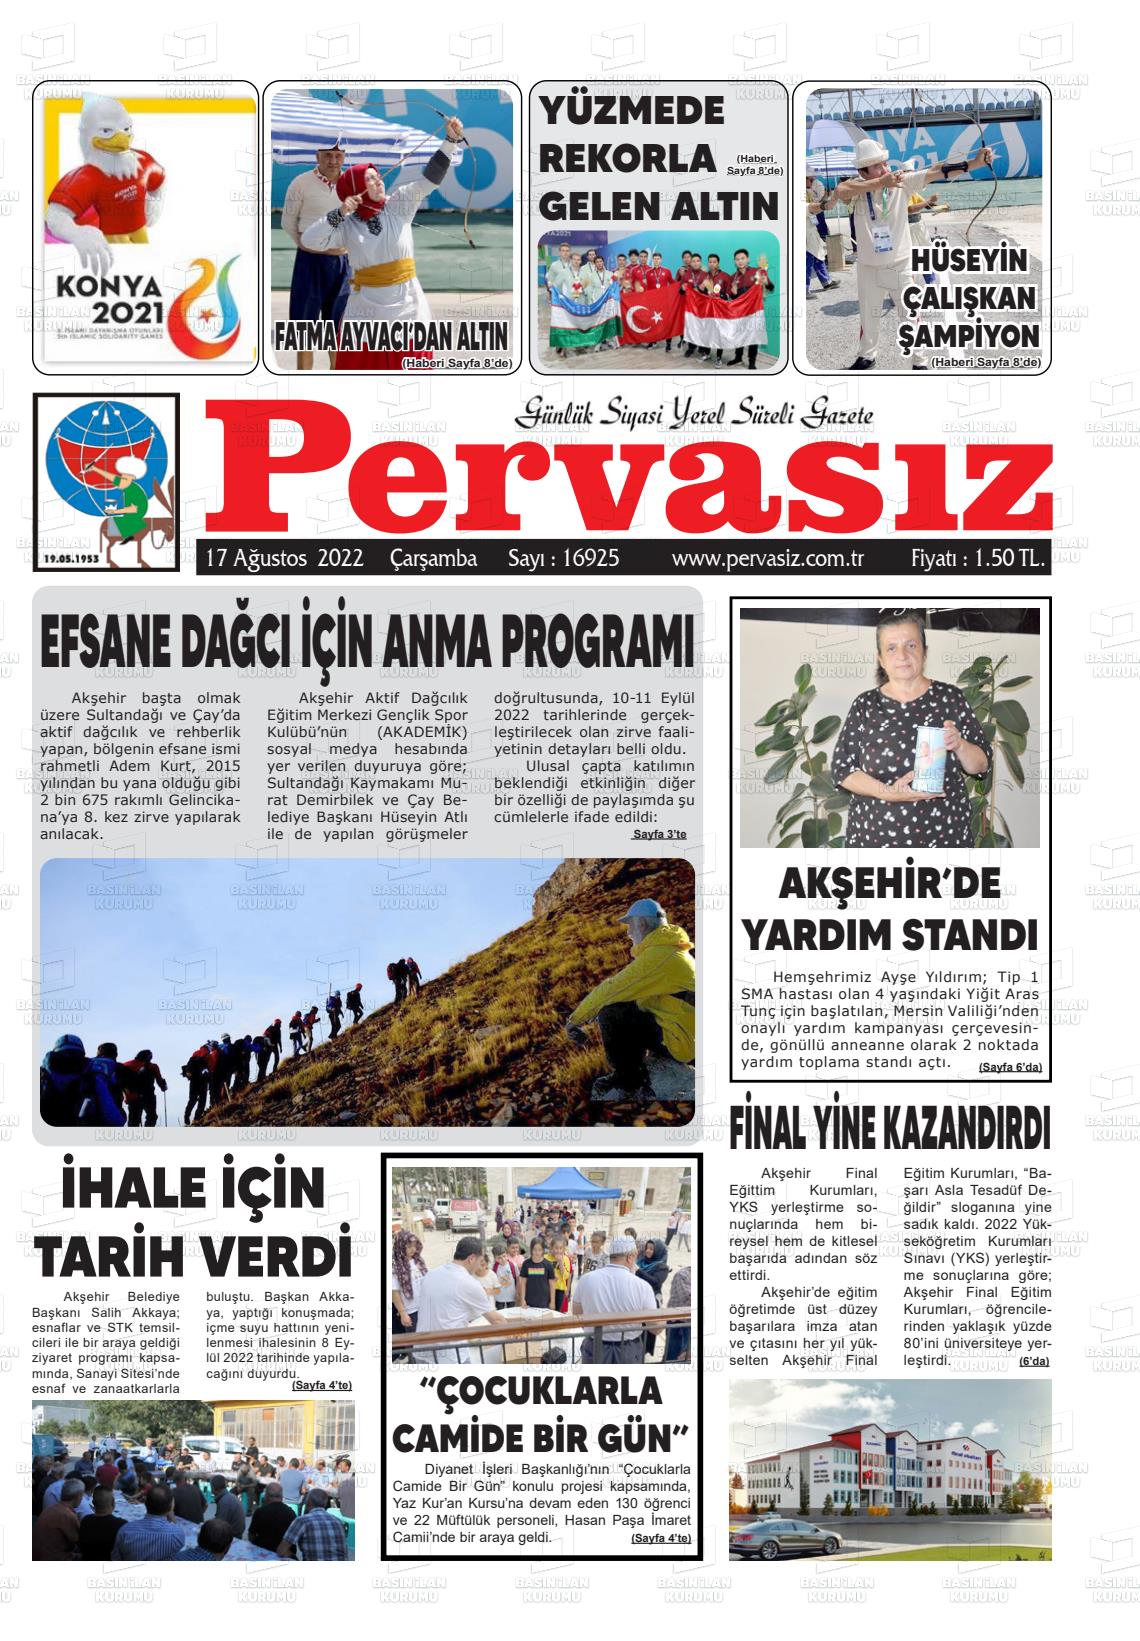 17 Ağustos 2022 Konya Pervasız Gazete Manşeti